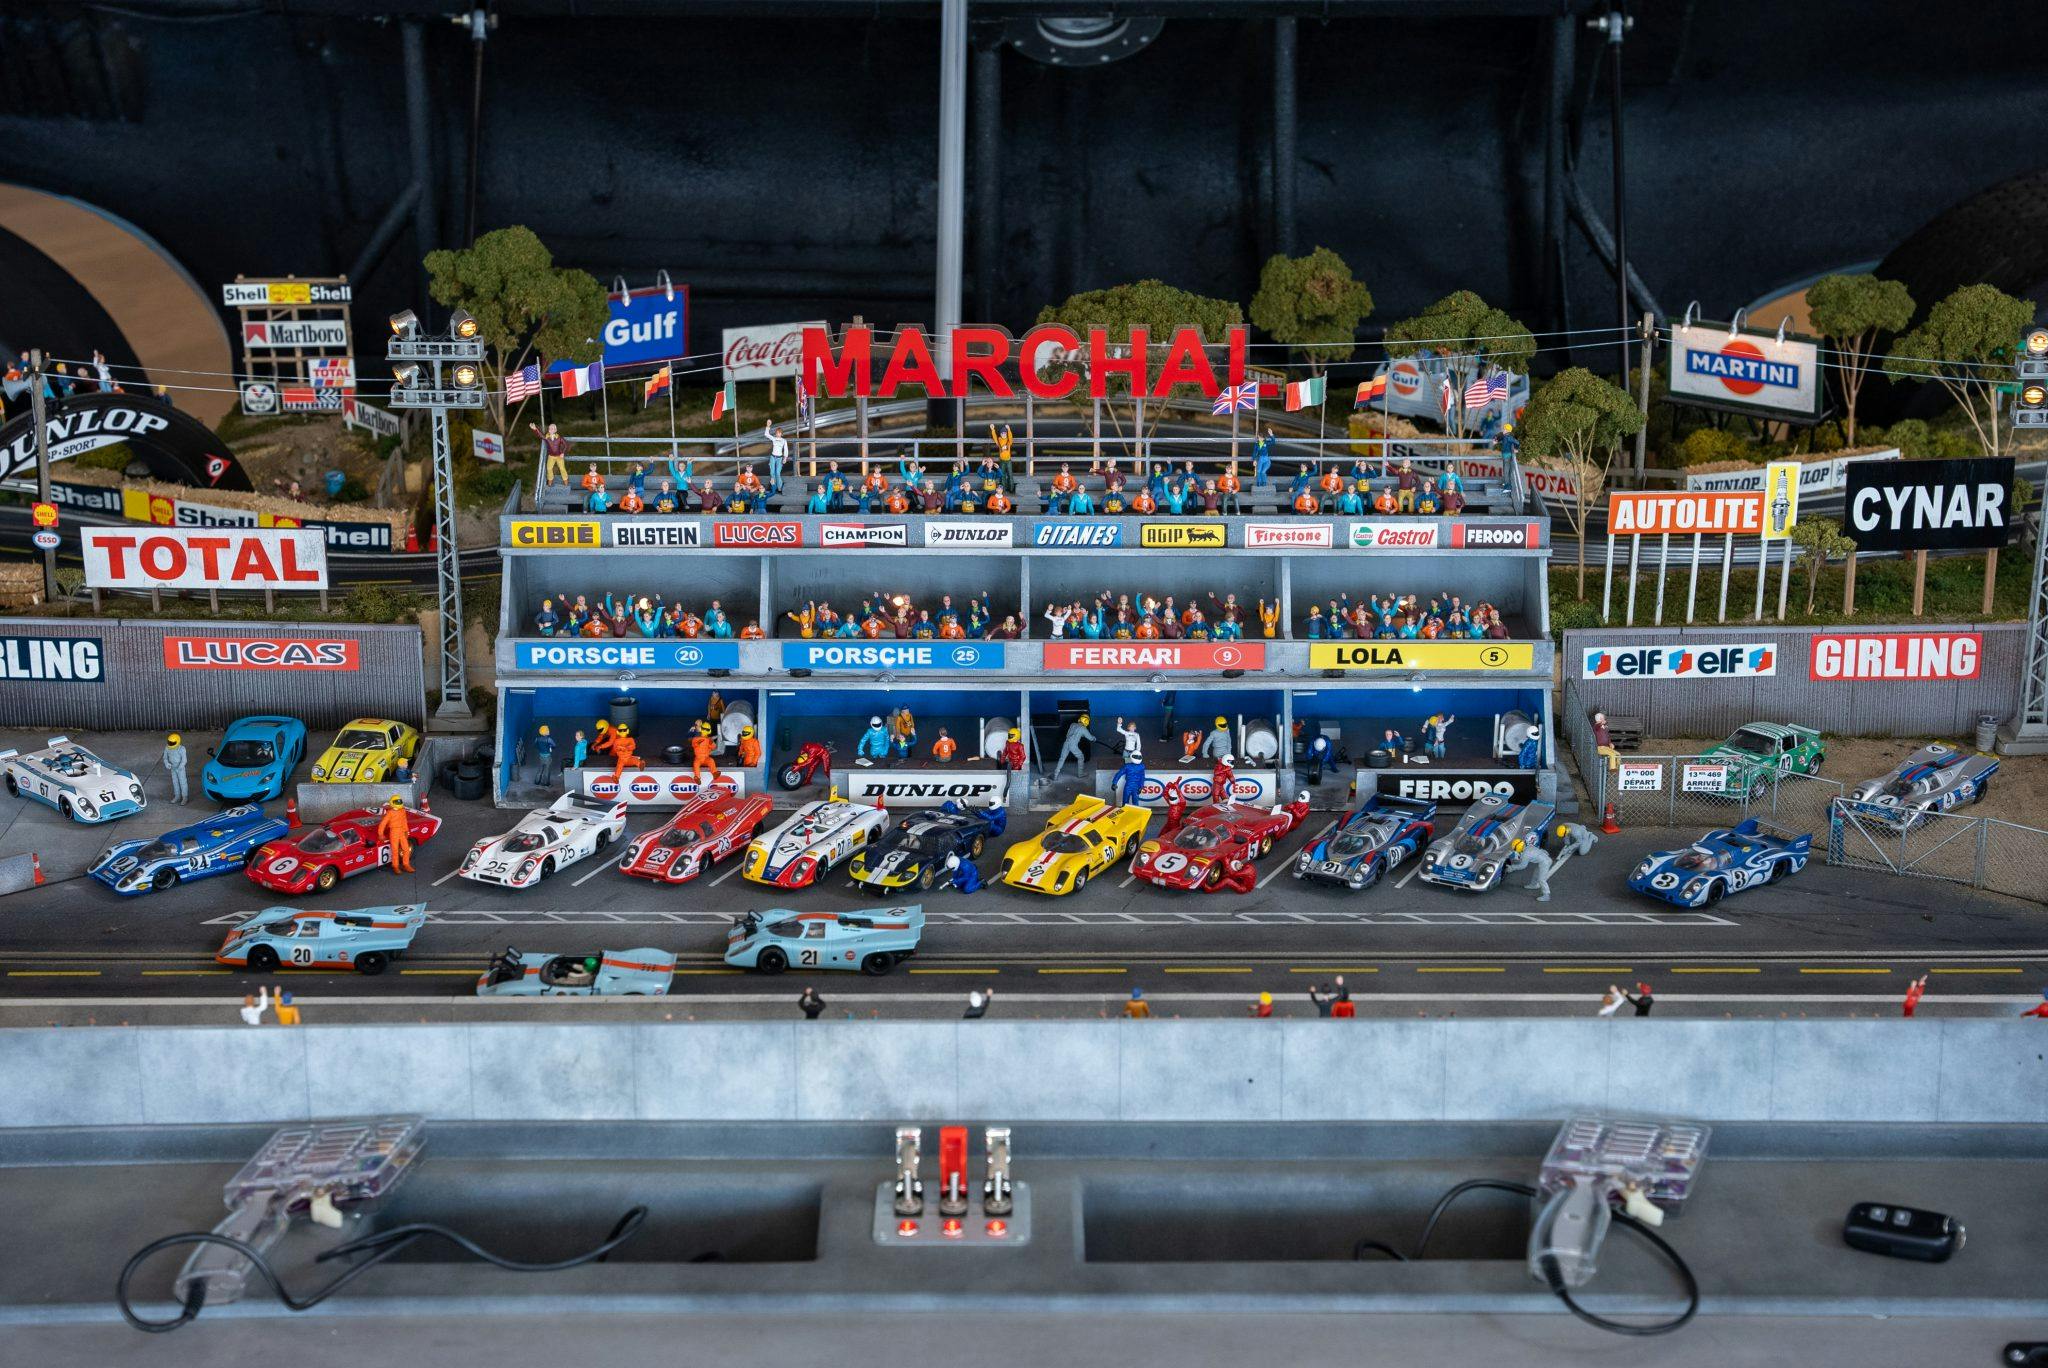 Porsche 917 slot cars Le Mans track pit lane stands full